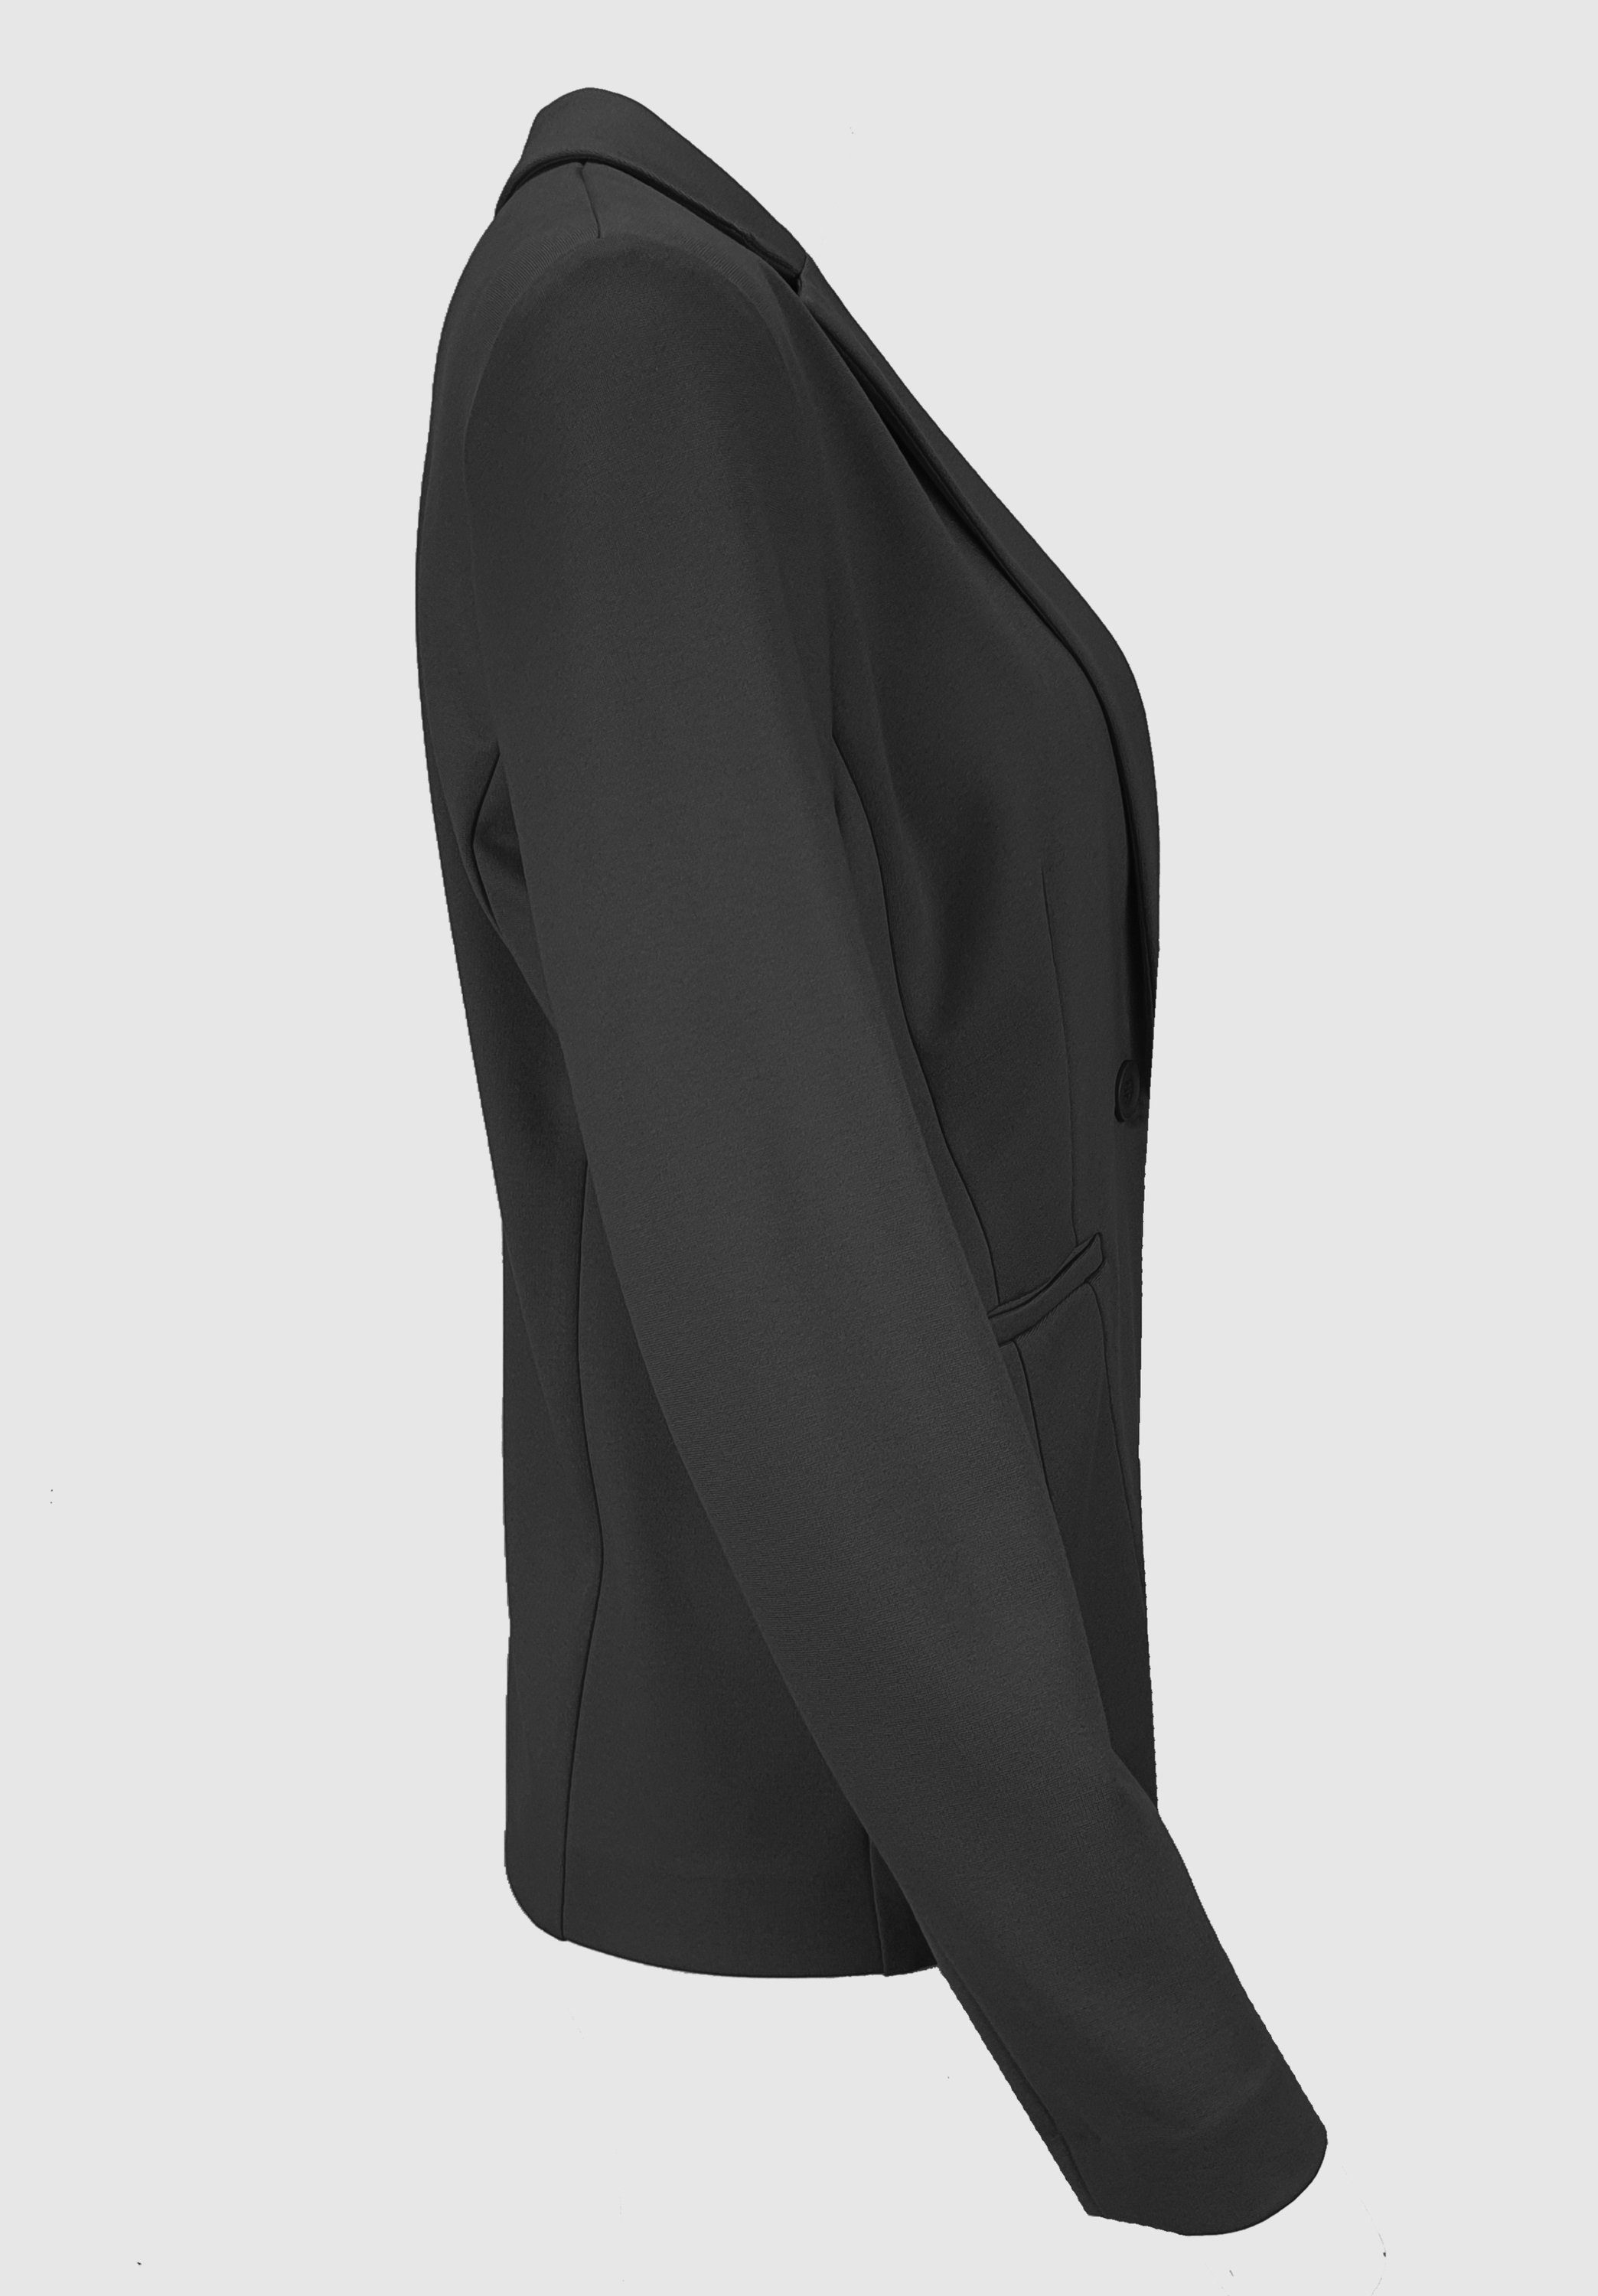 bianca Kurzjacke in Jerseyblazer Moderner Modefarbe black angesagter ALEXA